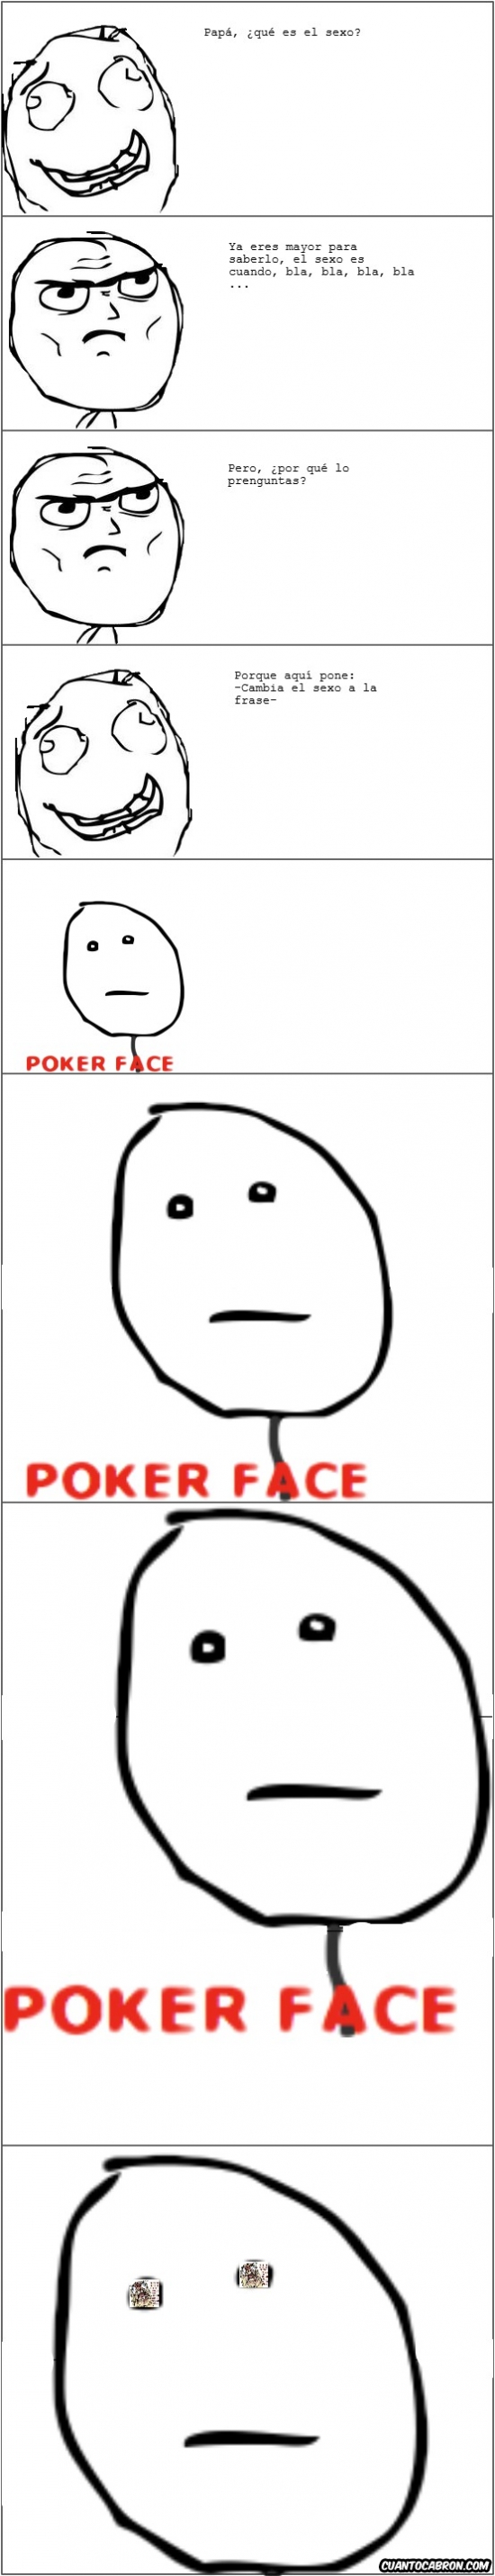 Pokerface - No hables antes de hora